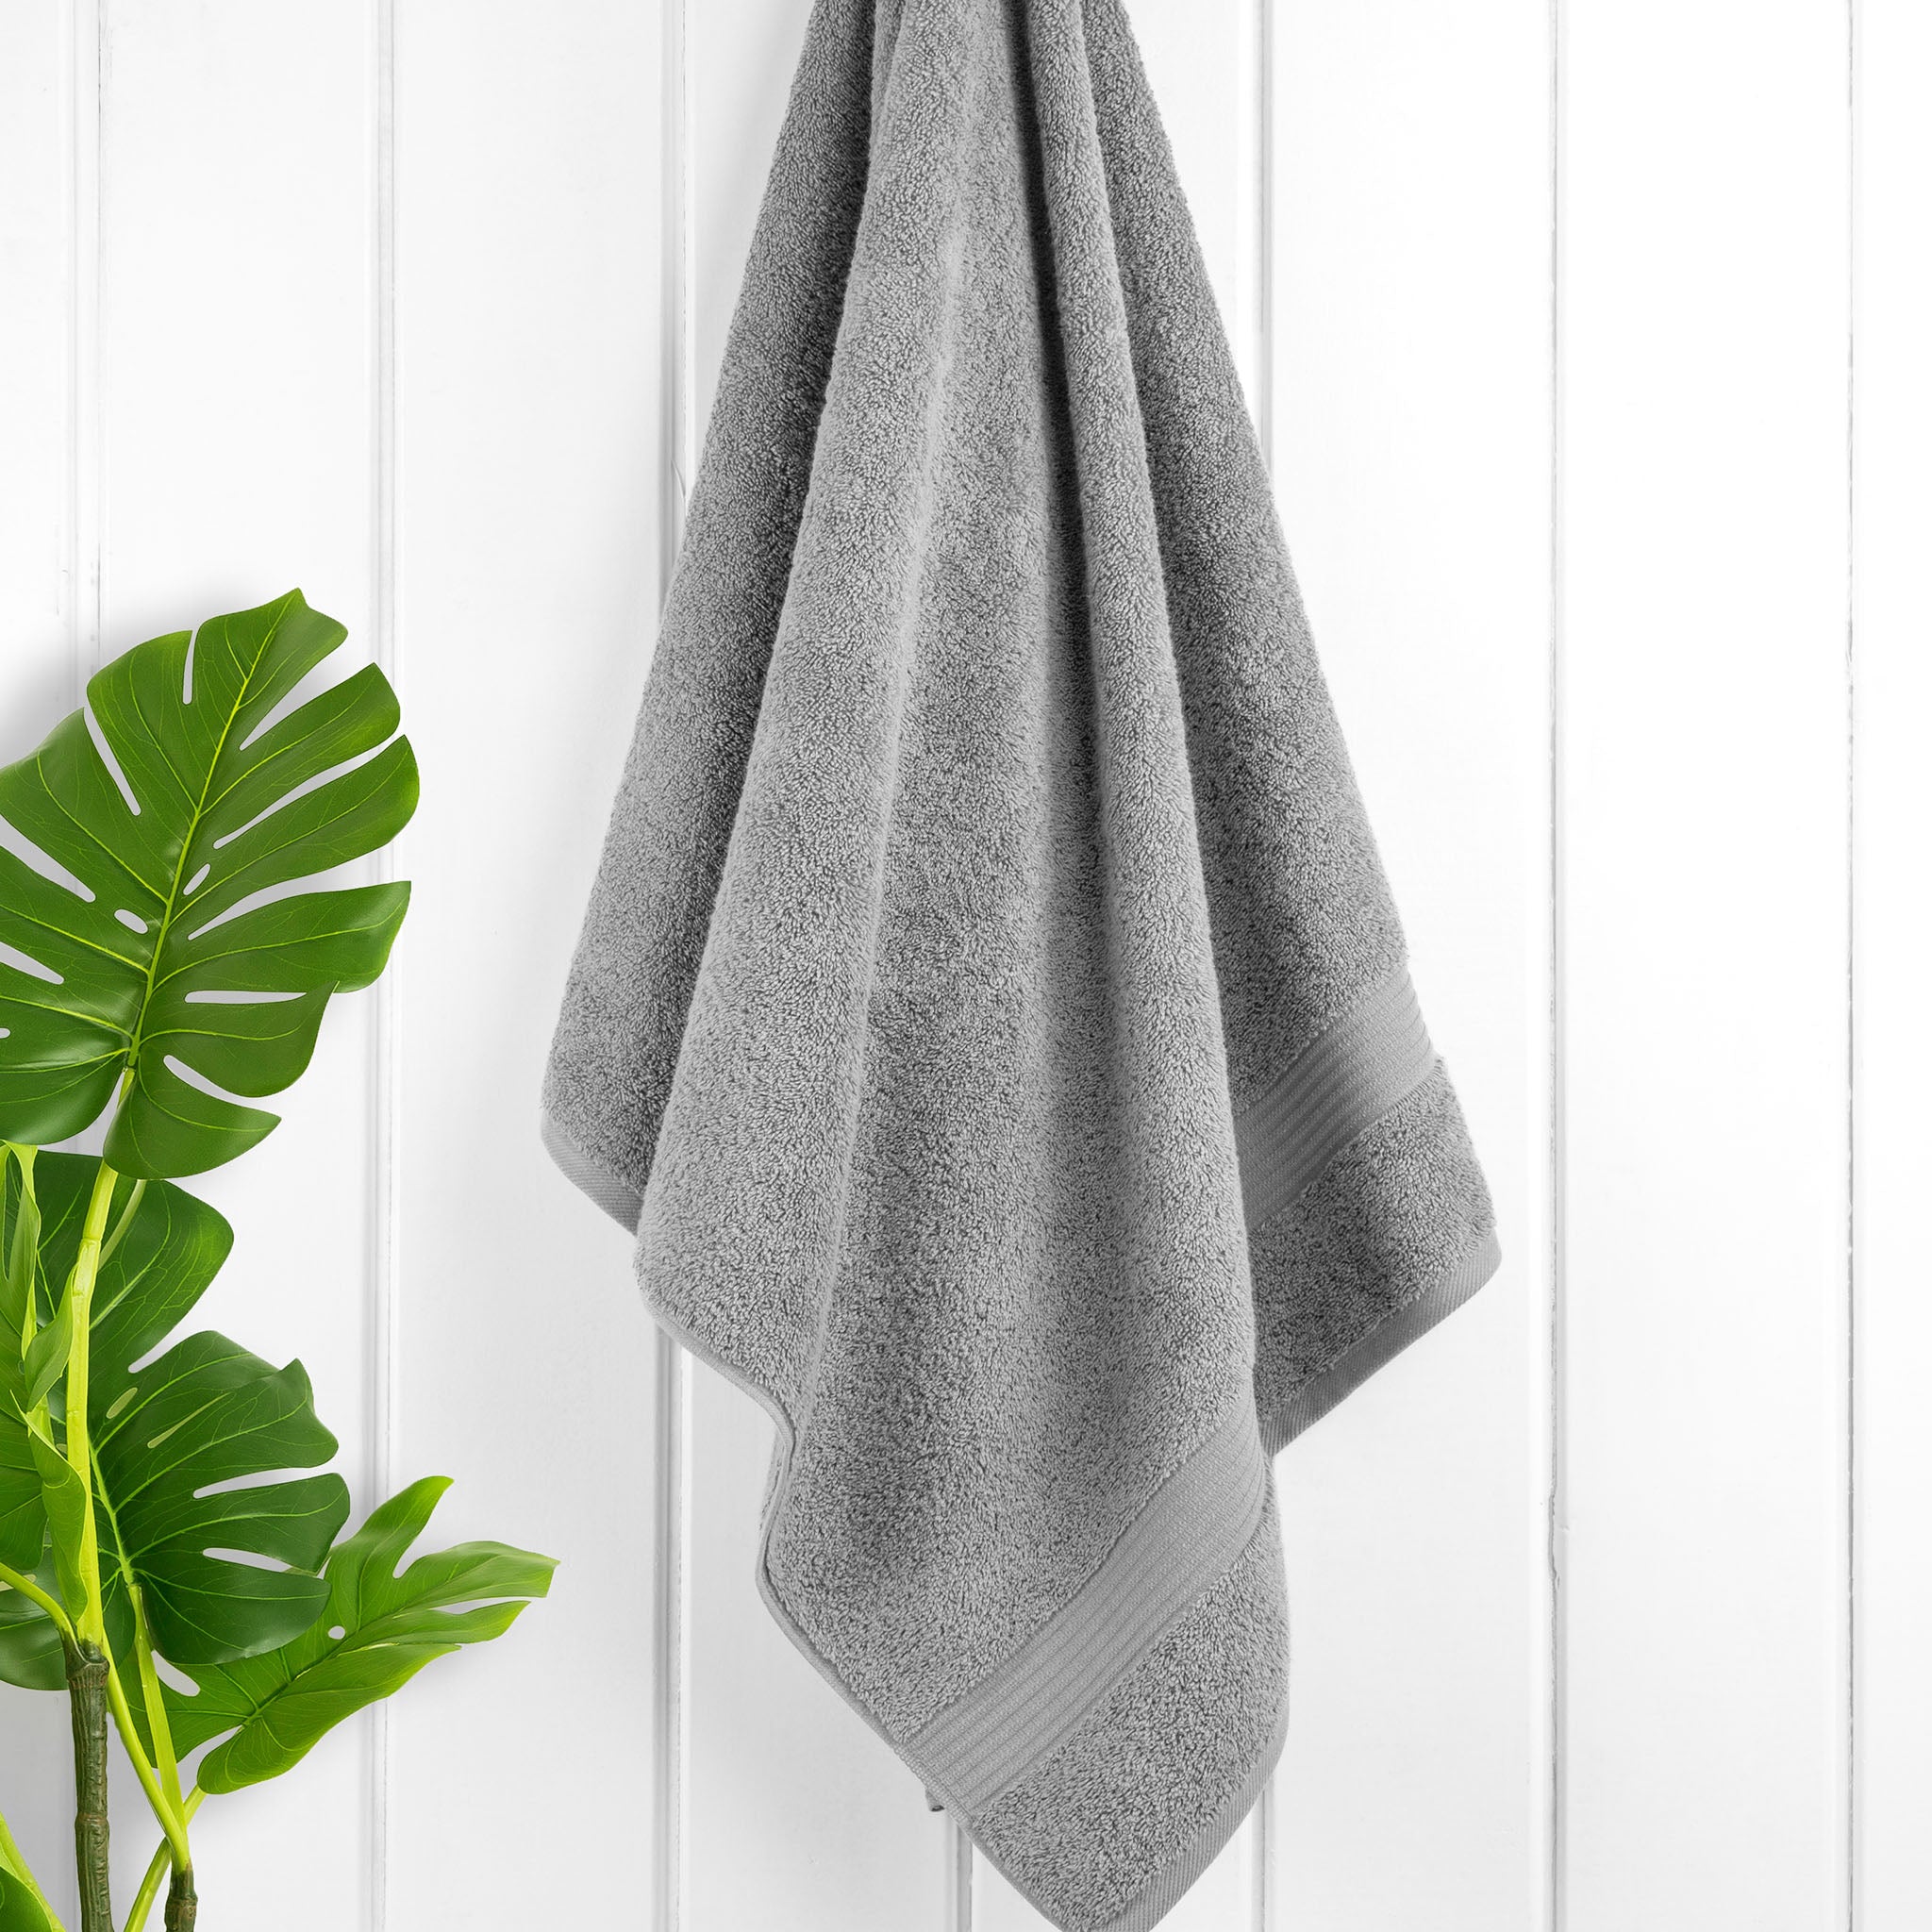 American Soft Linen Bekos 100% Cotton Turkish Towels, 4 Piece Bath Towel Set -rockridge-gray-02